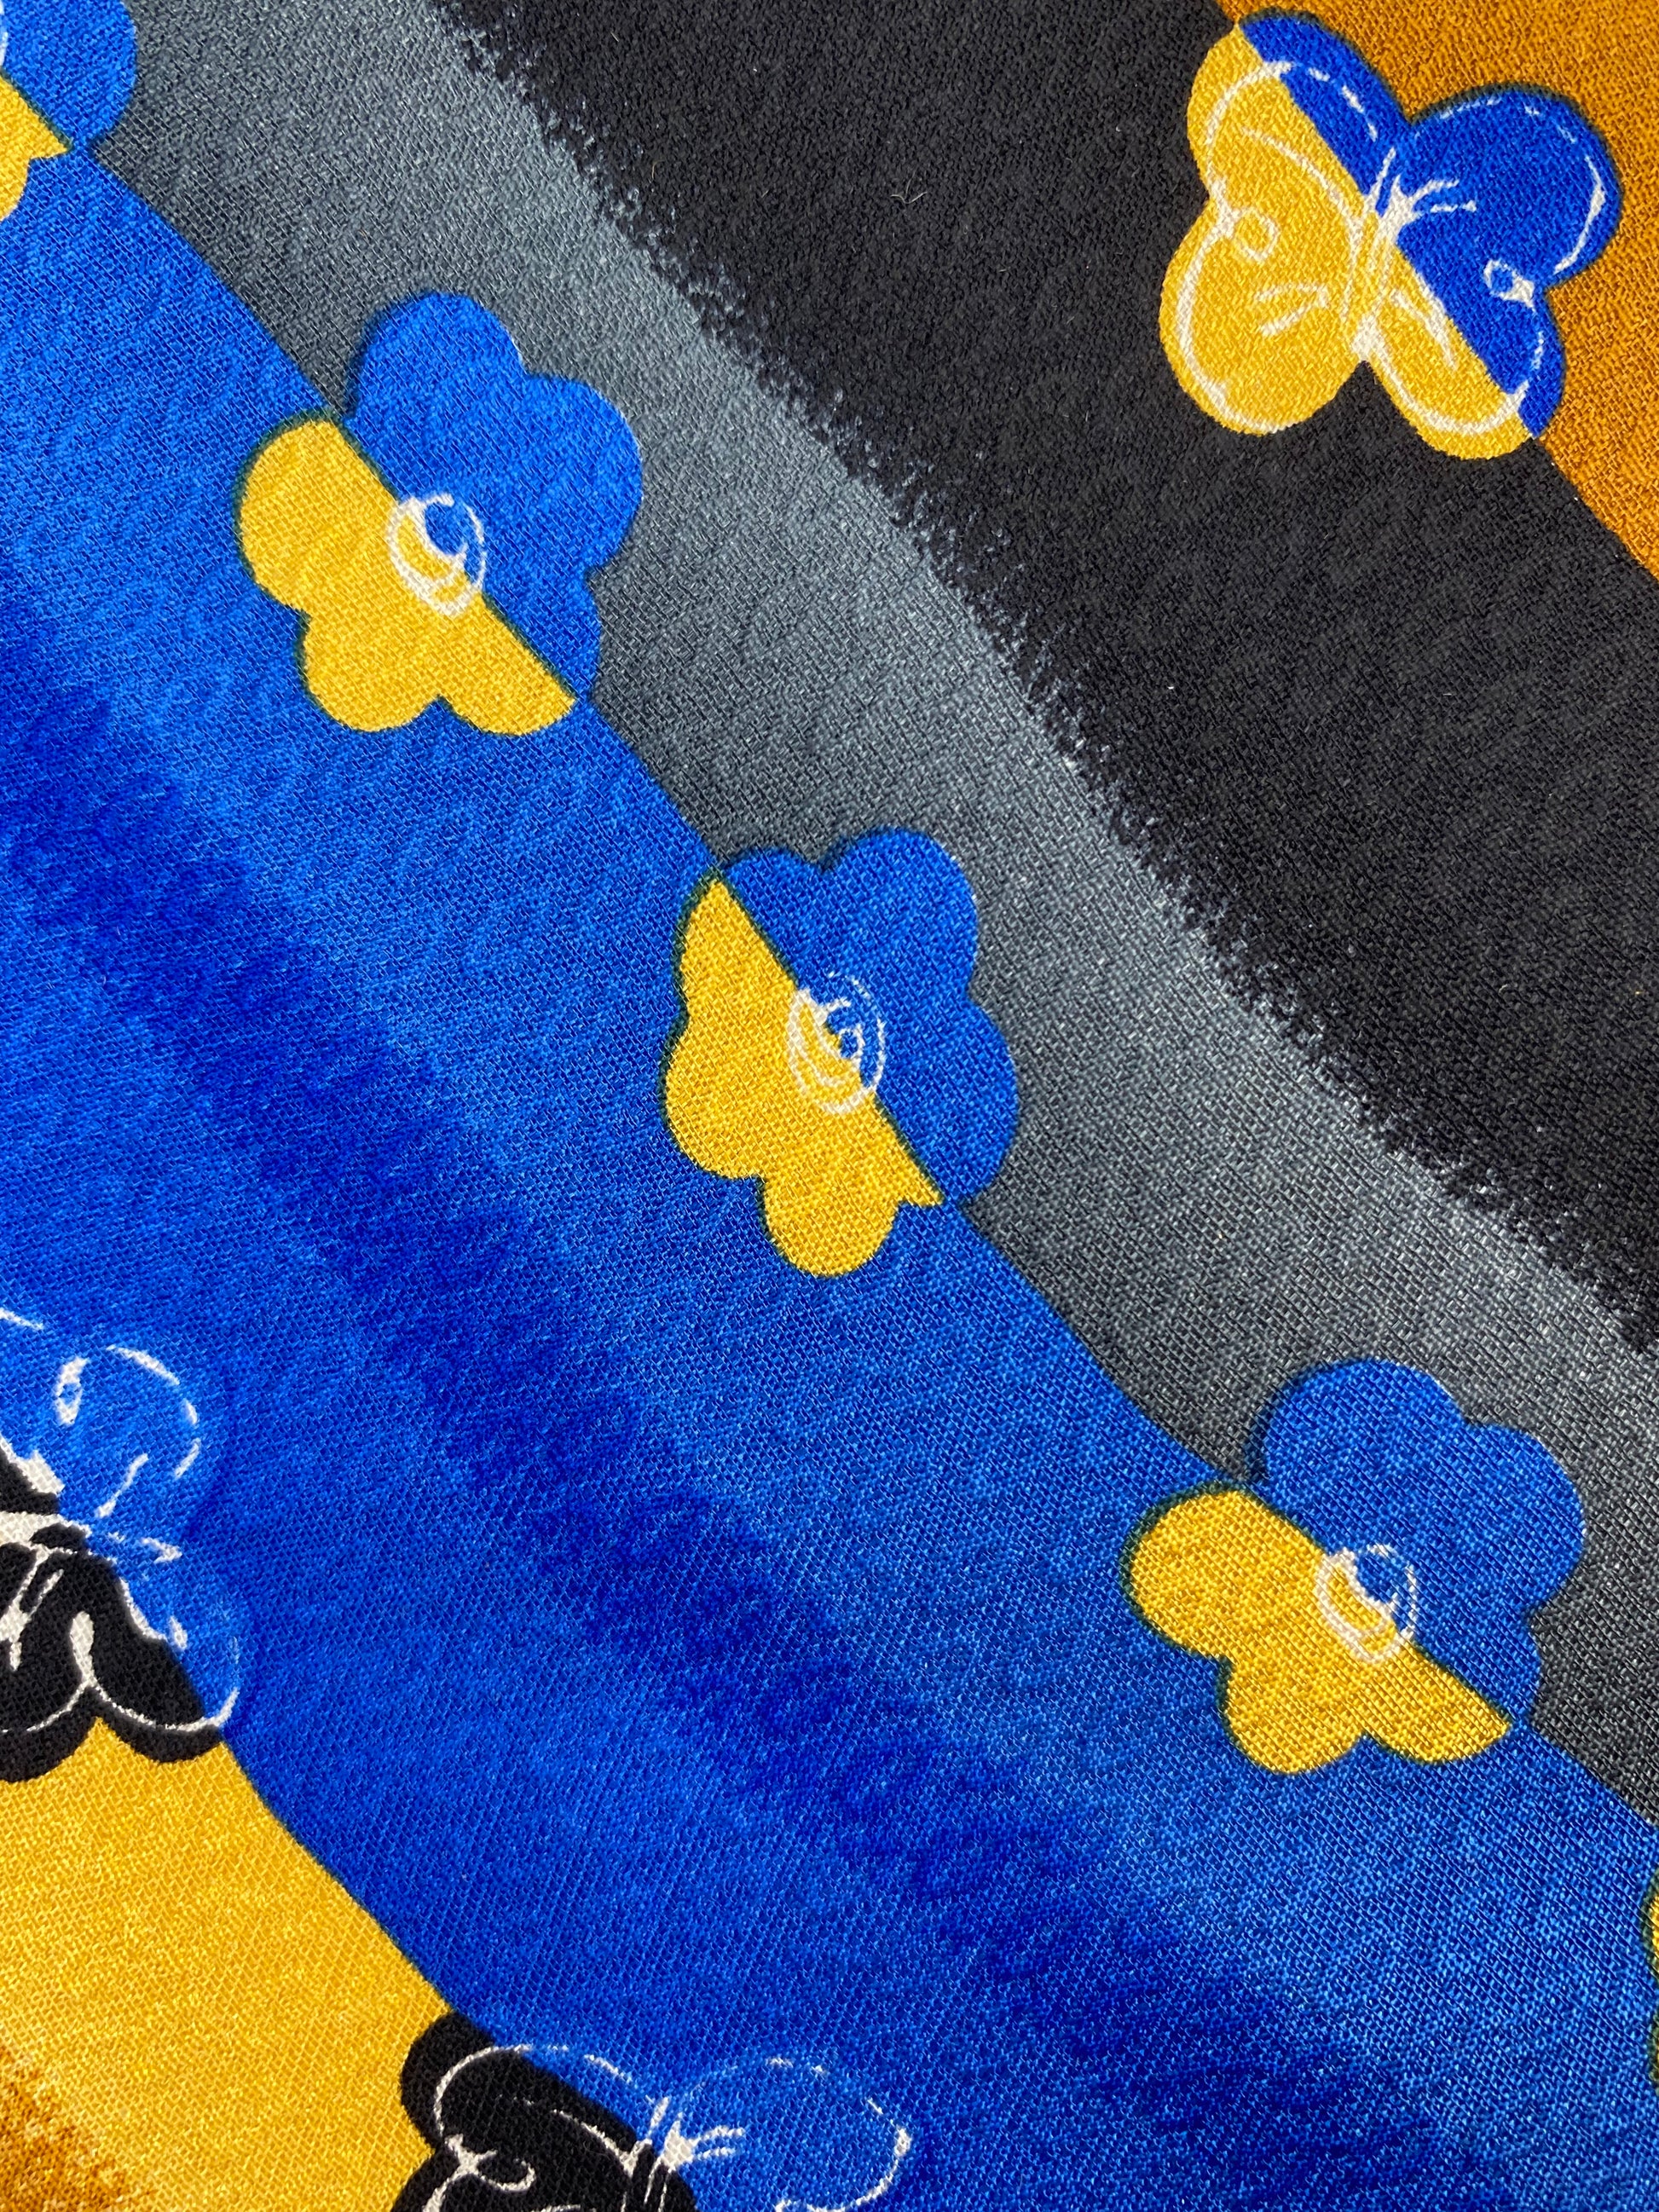 Close-up detail of: 90s Deadstock Silk Necktie, Men's Vintage Gold/Blue/Black Diagonal Stripe Floral Butterfly Pattern Tie, NOS